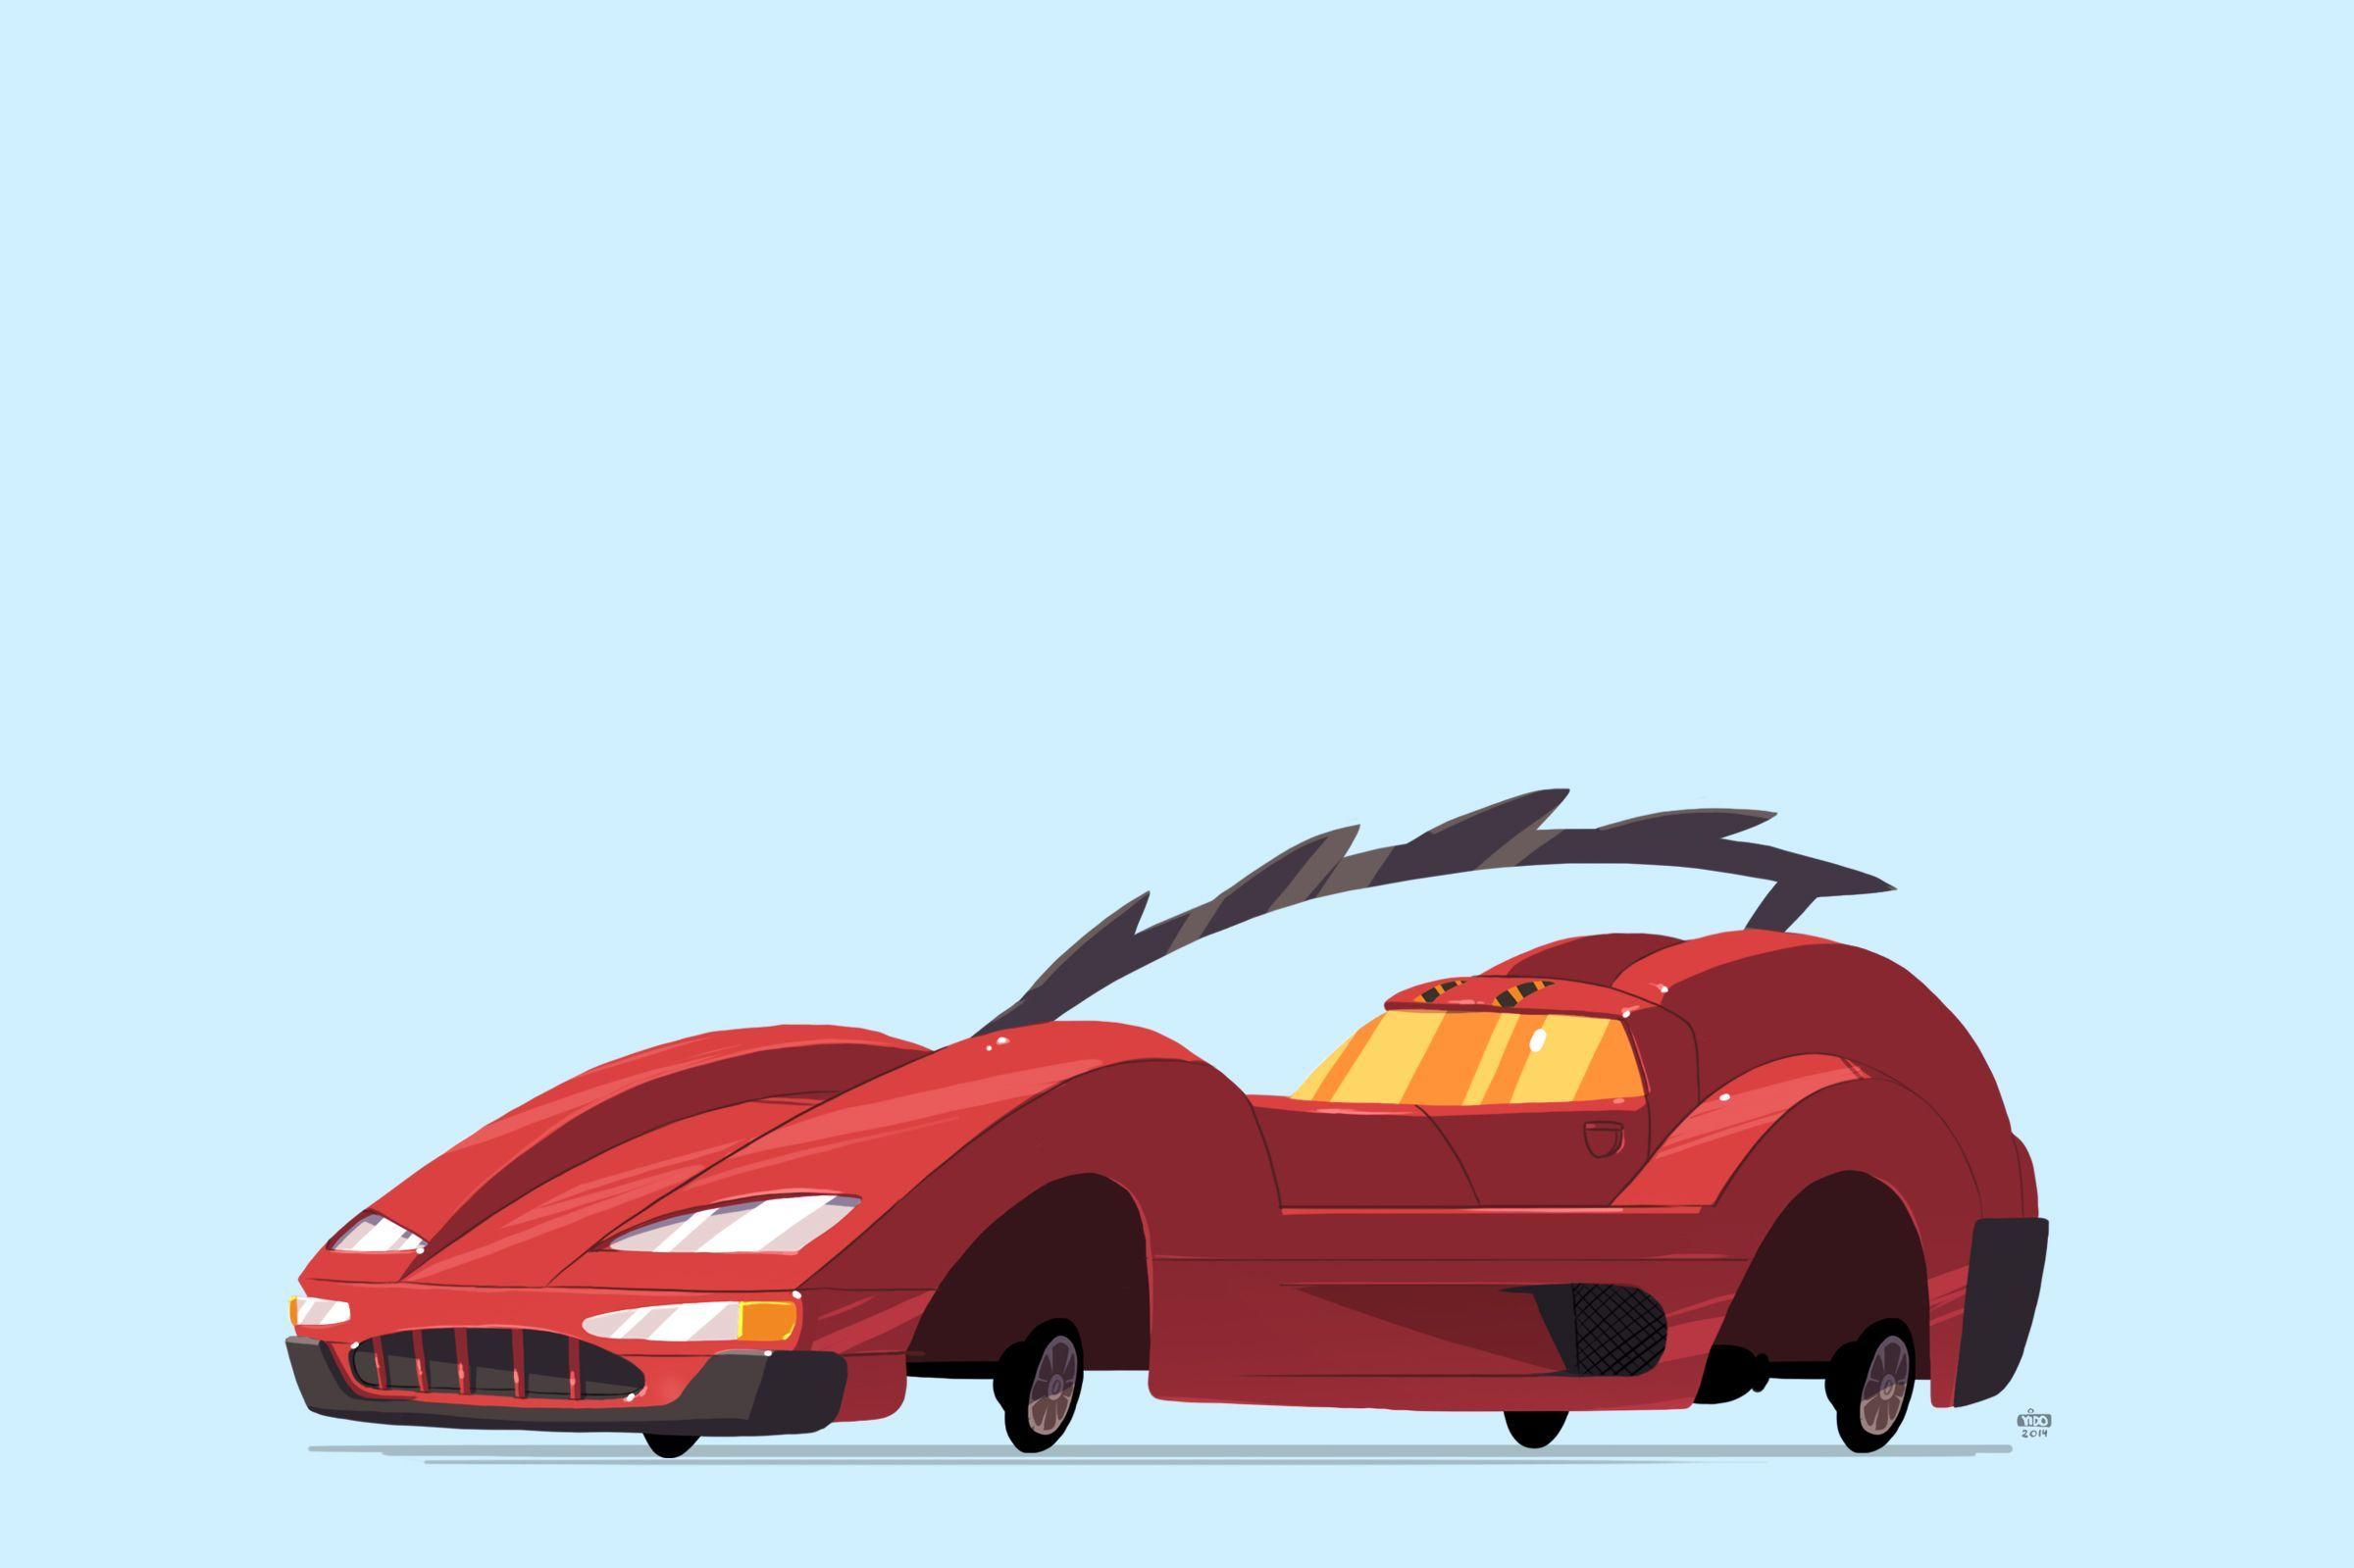 Red Eagle Car Logo - Max Damage's Red Eagle - Carmageddon | Games → Technics | Pinterest